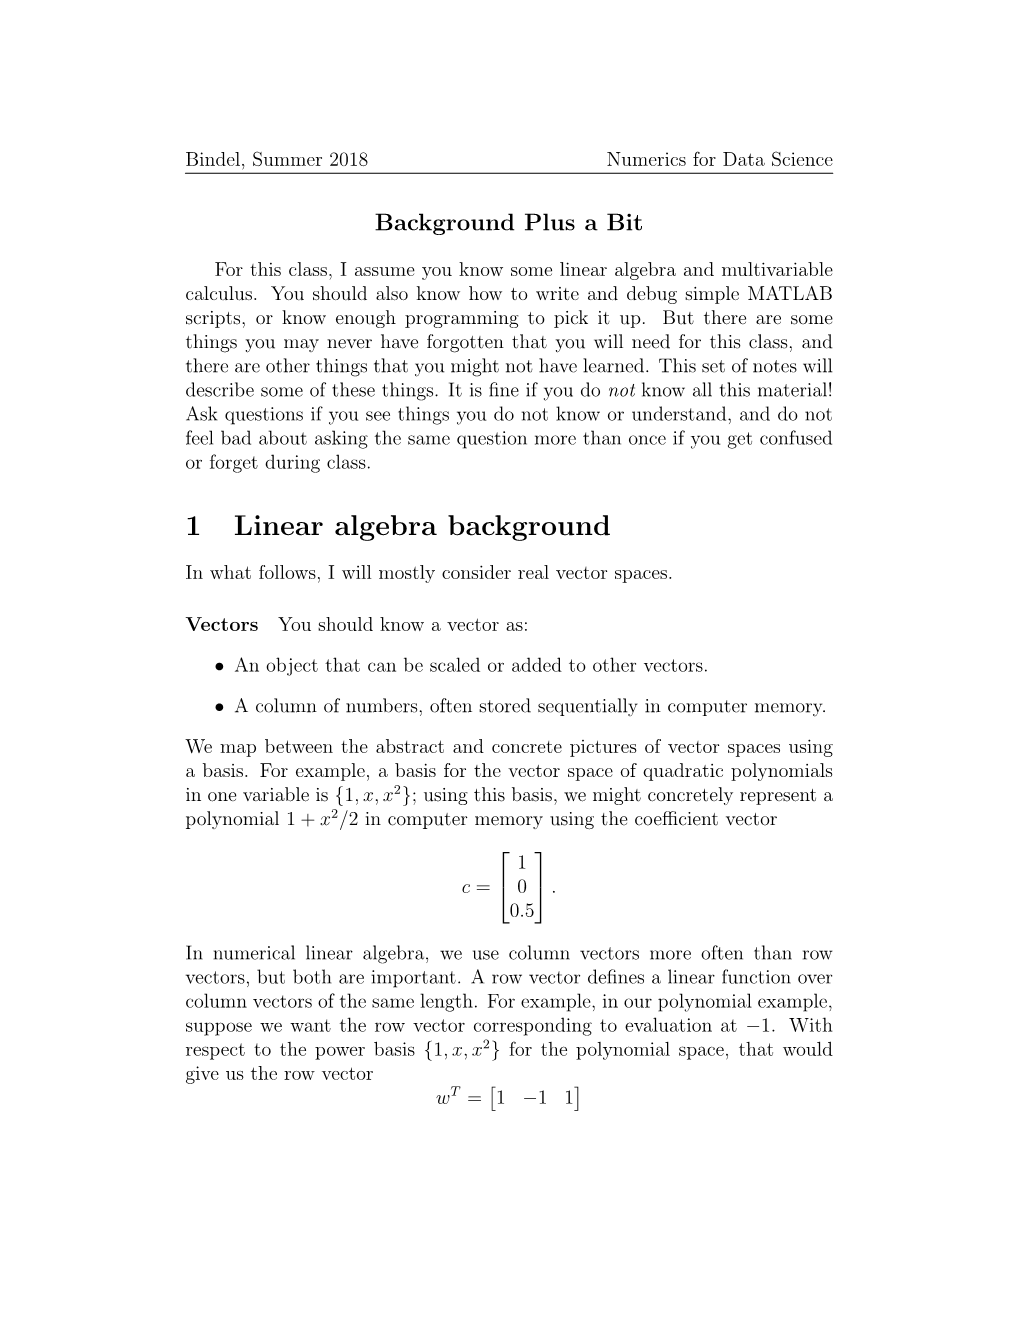 1 Linear Algebra Background